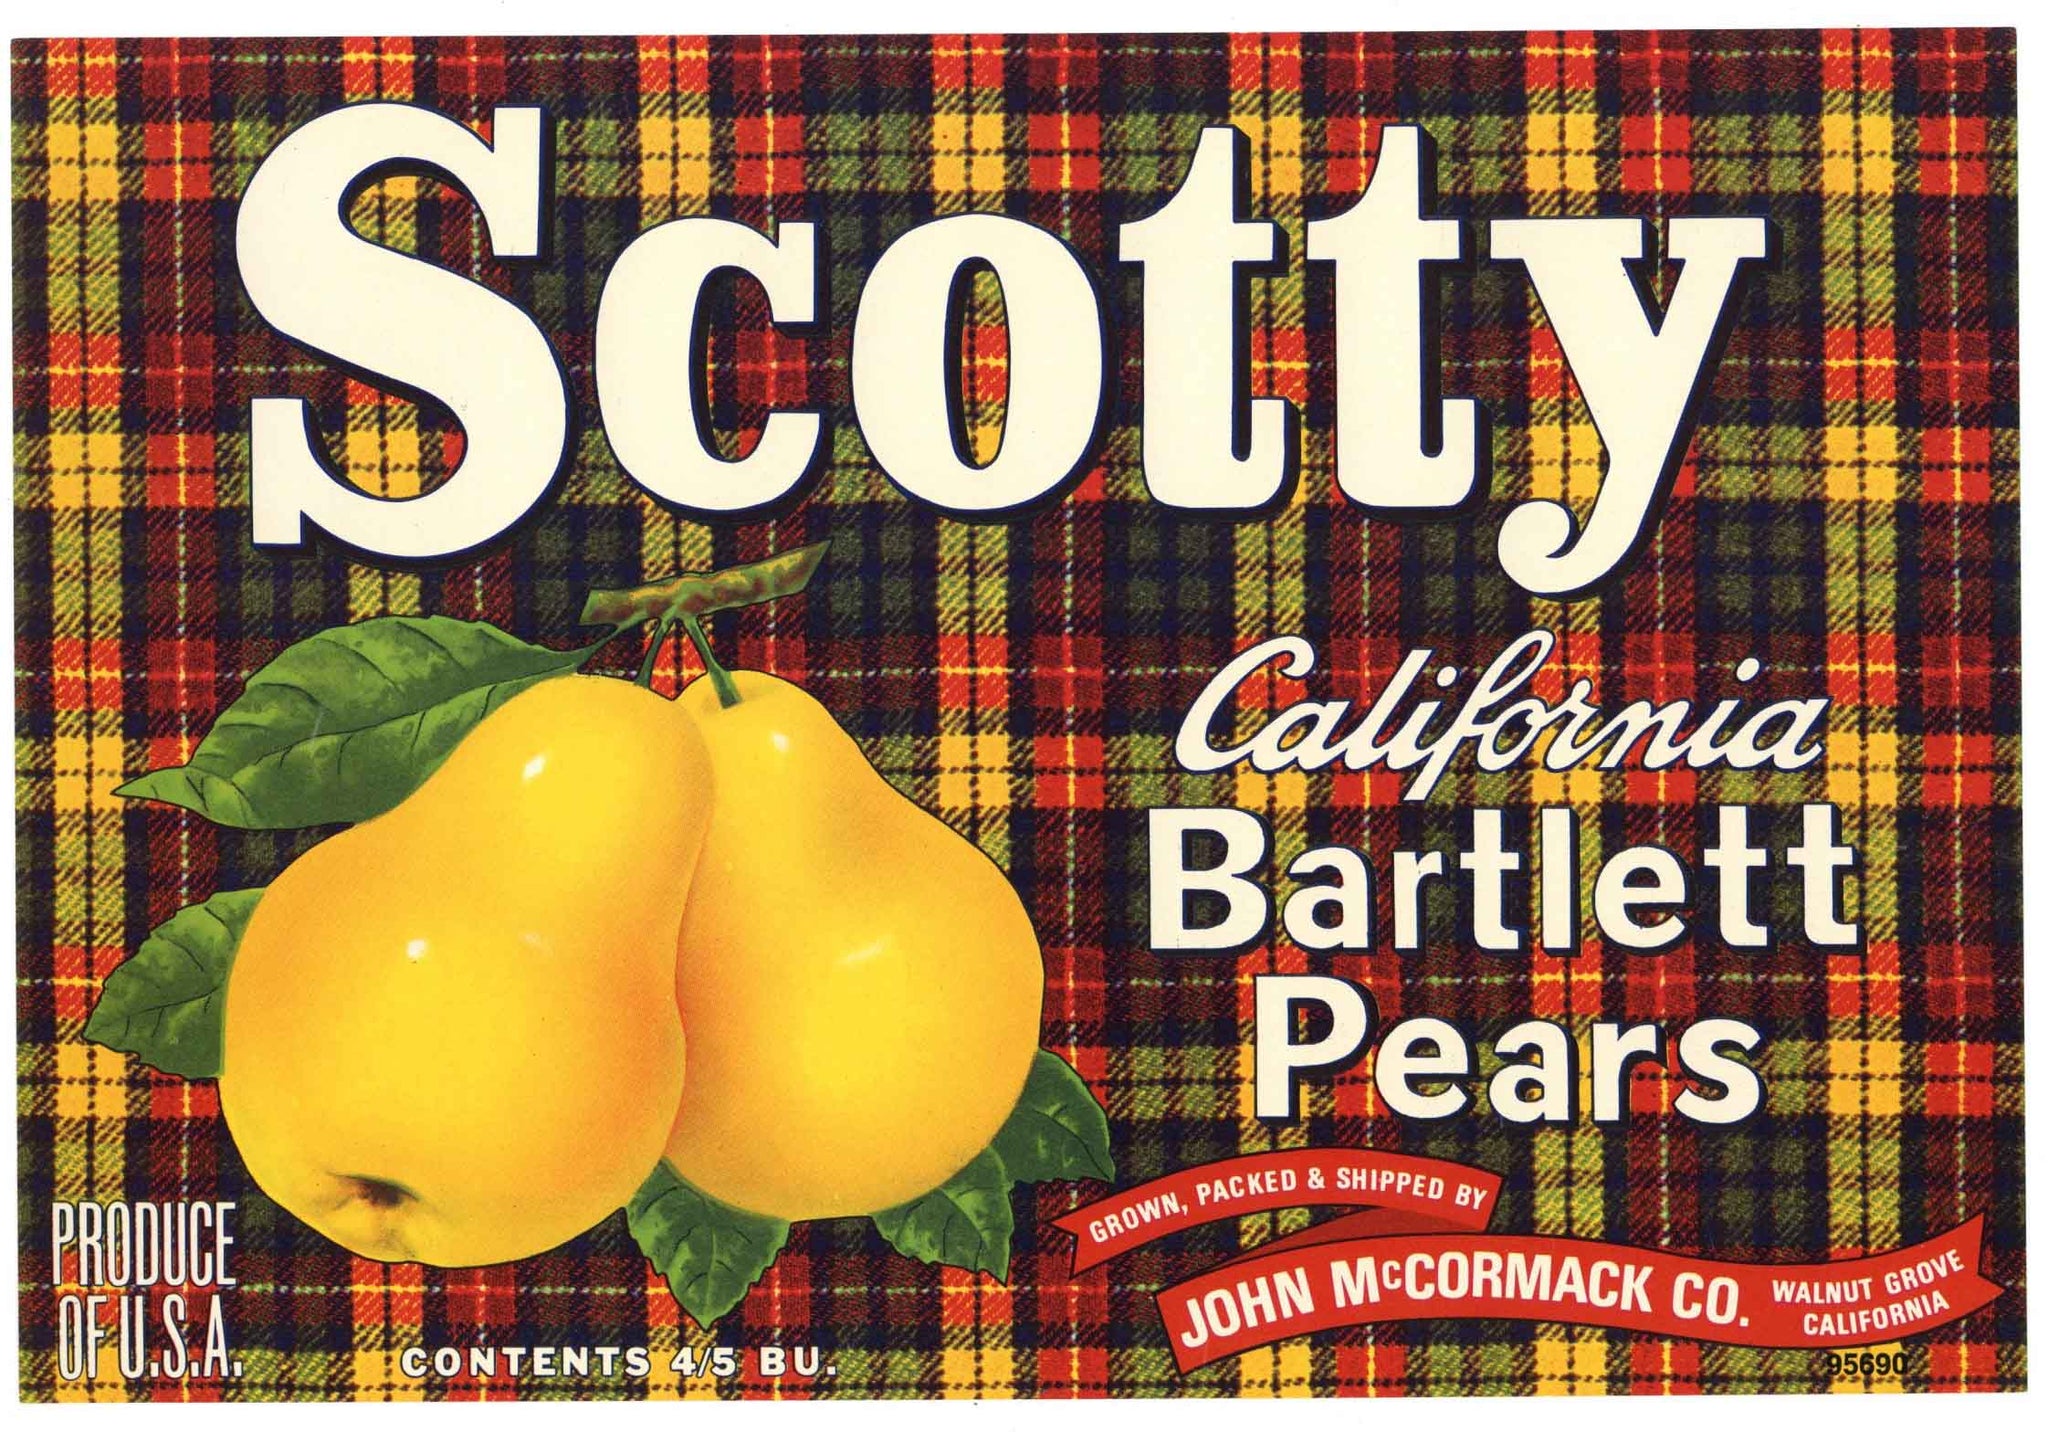 Scotty Brand Vintage Sacramento Delta Pear Crate Label, zipcode